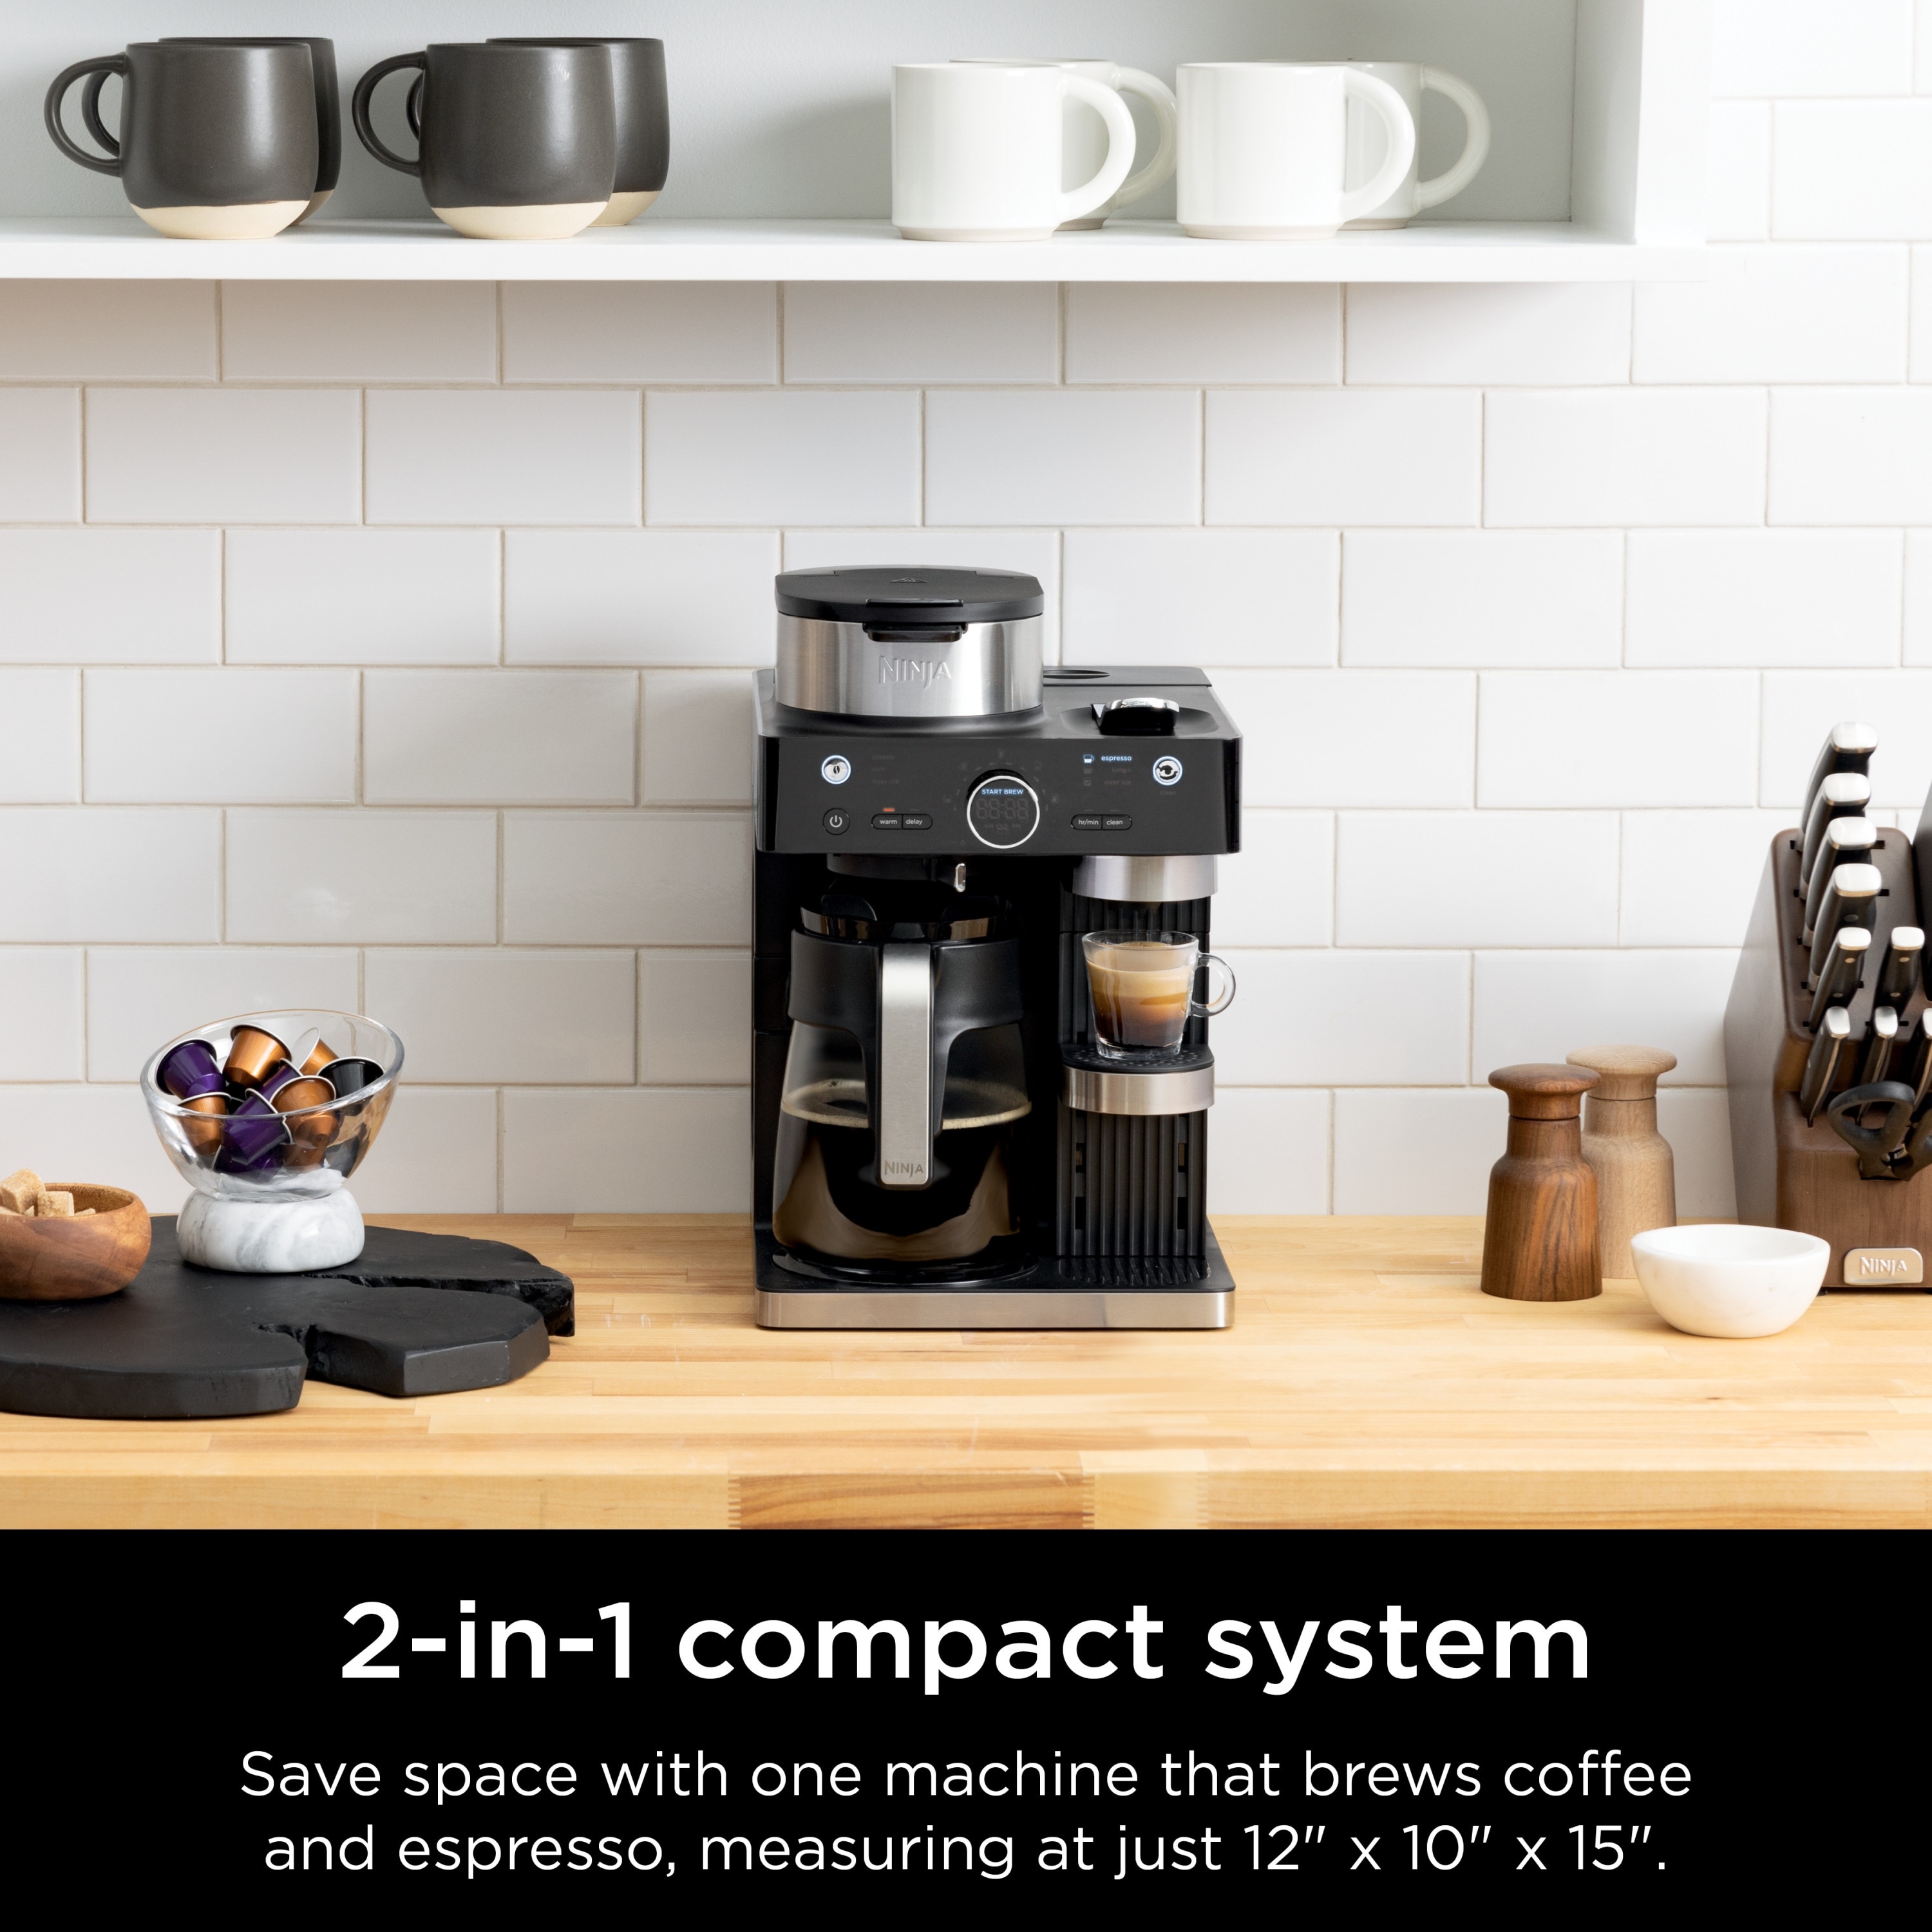 Coffee Maker  Getting Started (Ninja® Espresso & Coffee Barista